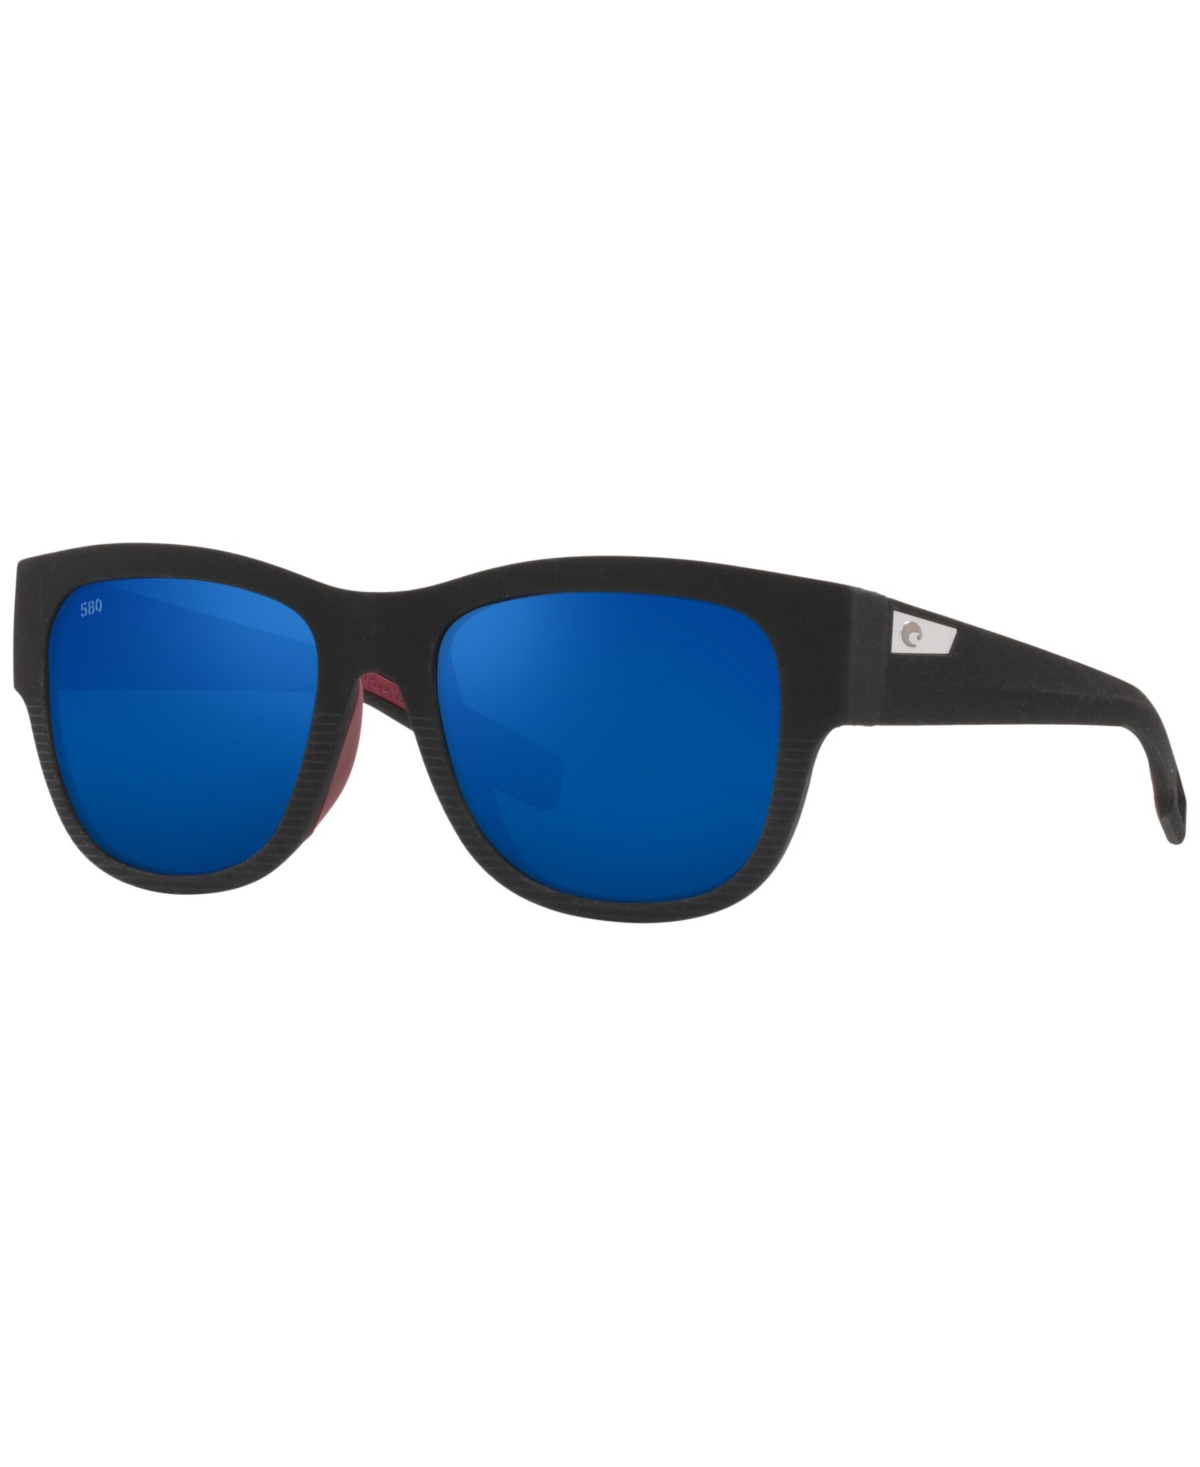 Women's Polarized Sunglasses, 6S9084 Caleta - Net Black